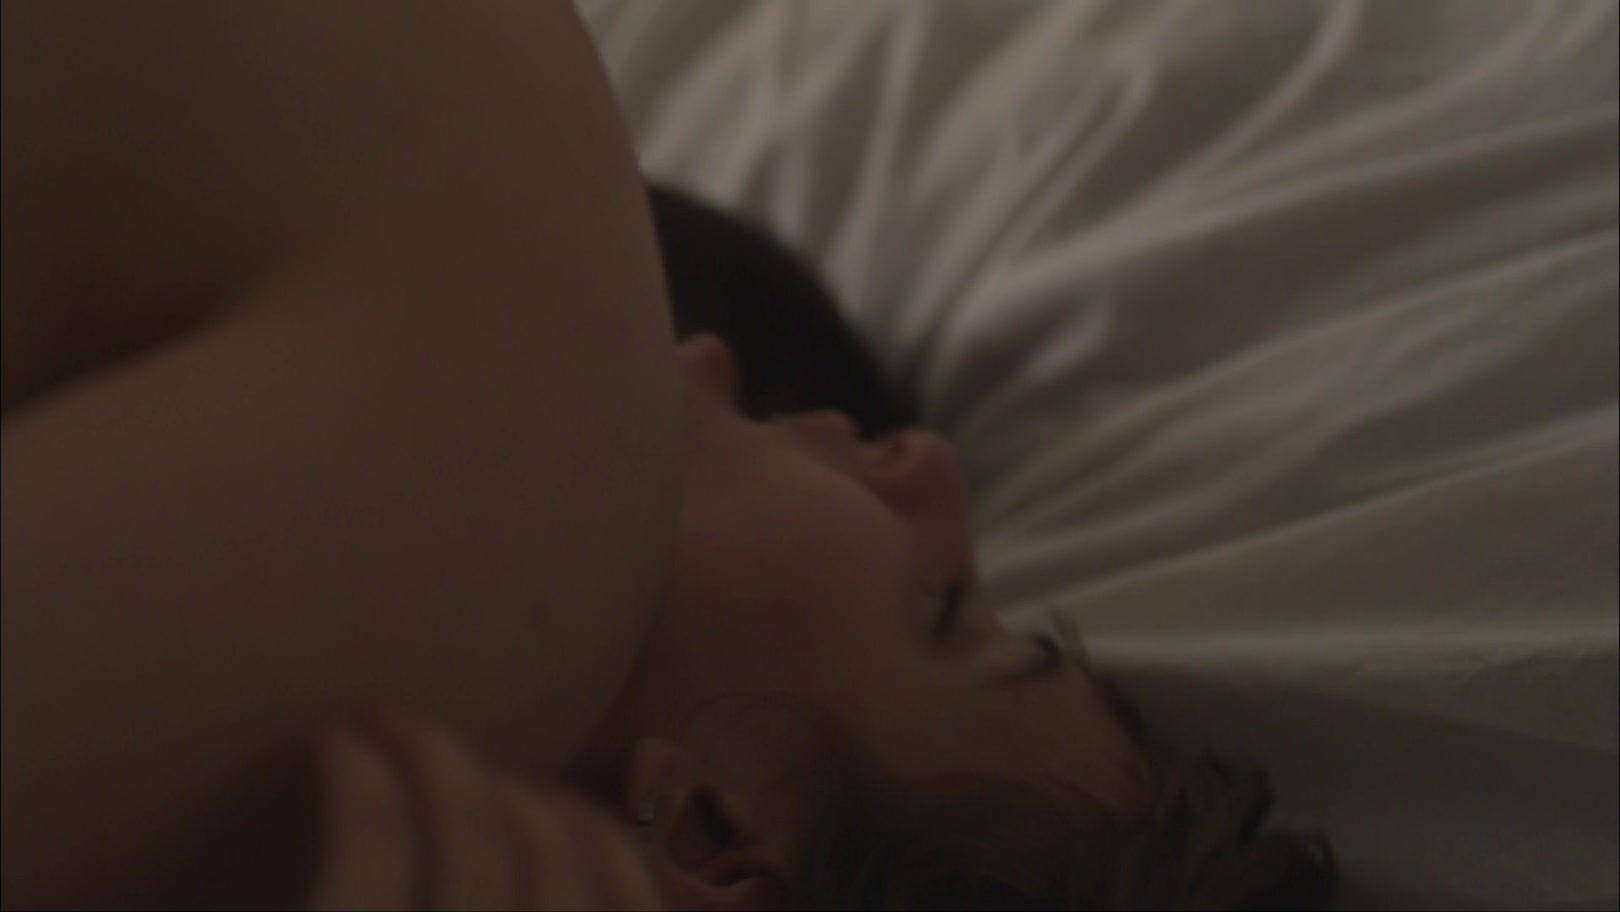 Hetero Mainstream Sex Movie "Klip" (2012) Teasing